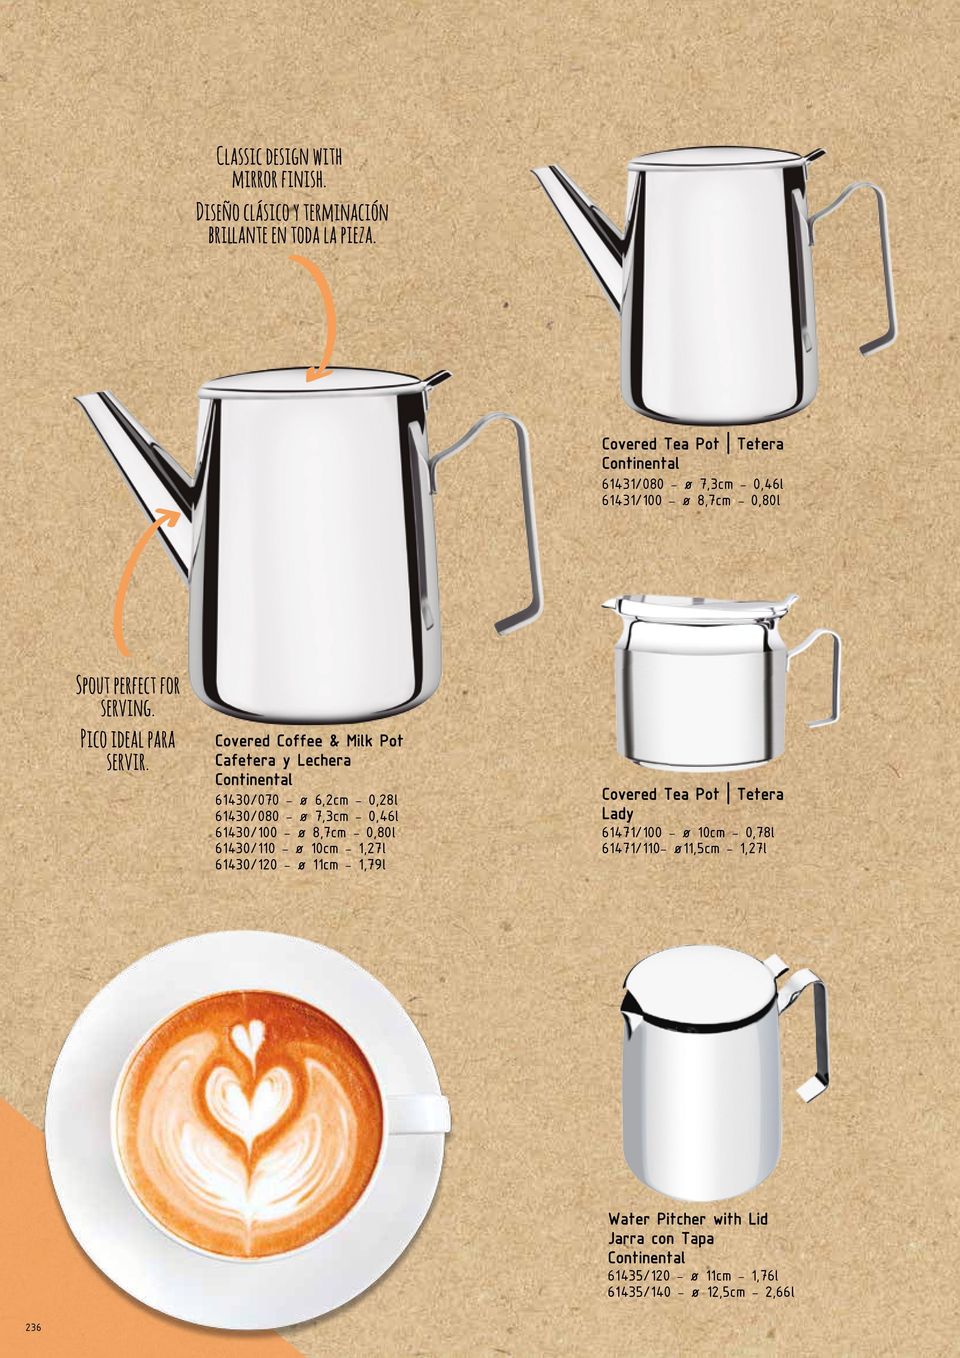 Covered Coffee & Milk Pot Cafetera y Lechera Continental 61430/070 - ø 6,2cm - 0,28l 61430/080 - ø 7,3cm - 0,46l 61430/100 - ø 8,7cm - 0,80l 61430/110 - ø